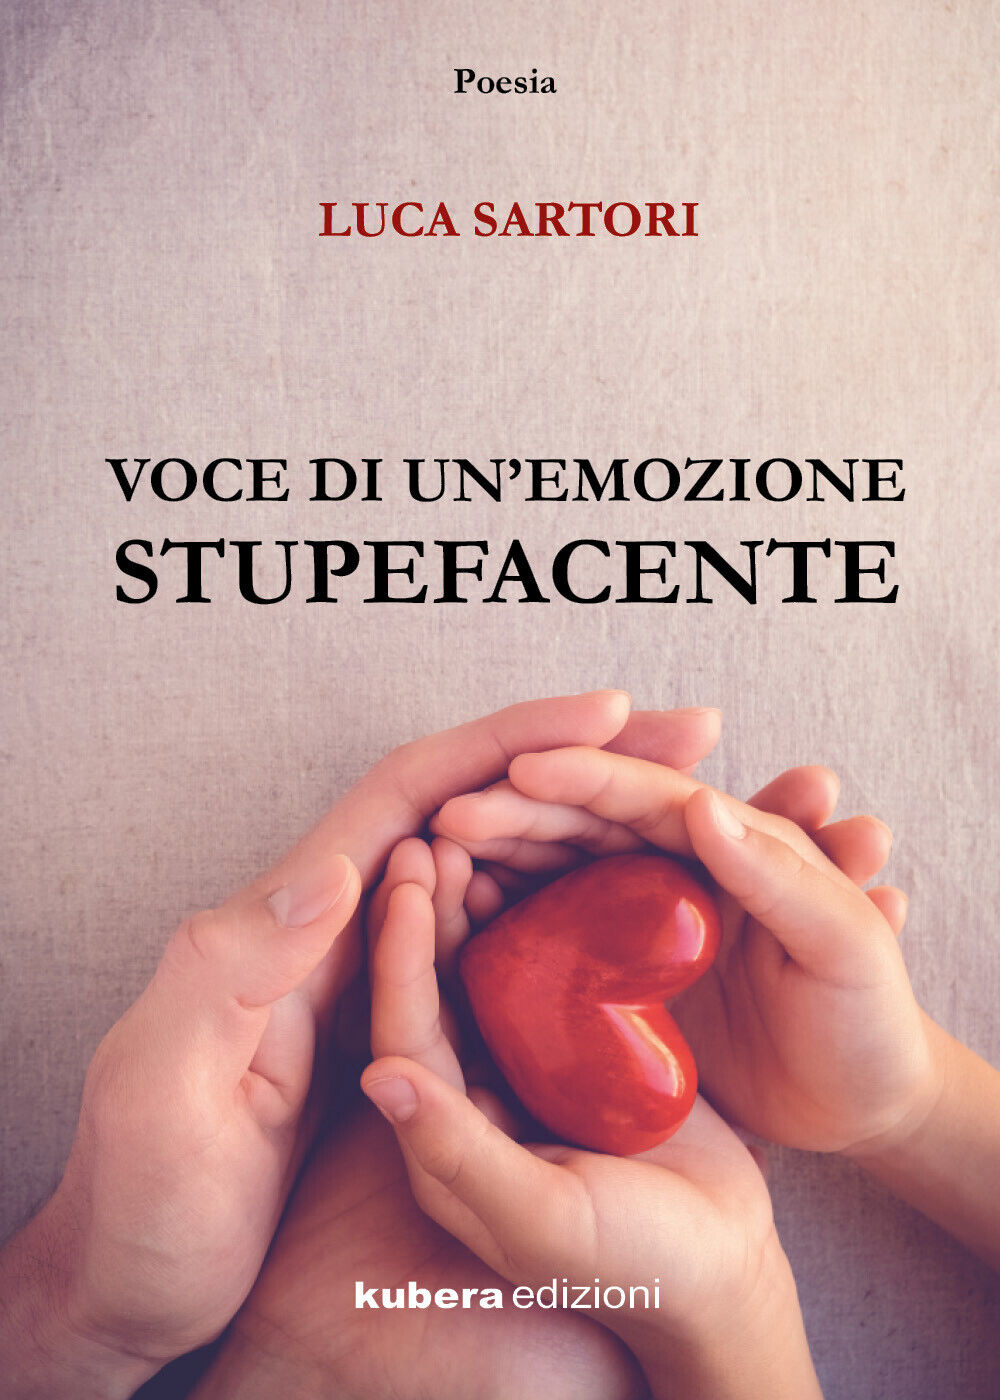 Voce di un?emozione stupefacente di Luca Sartori,  2019,  Kubera Edizioni